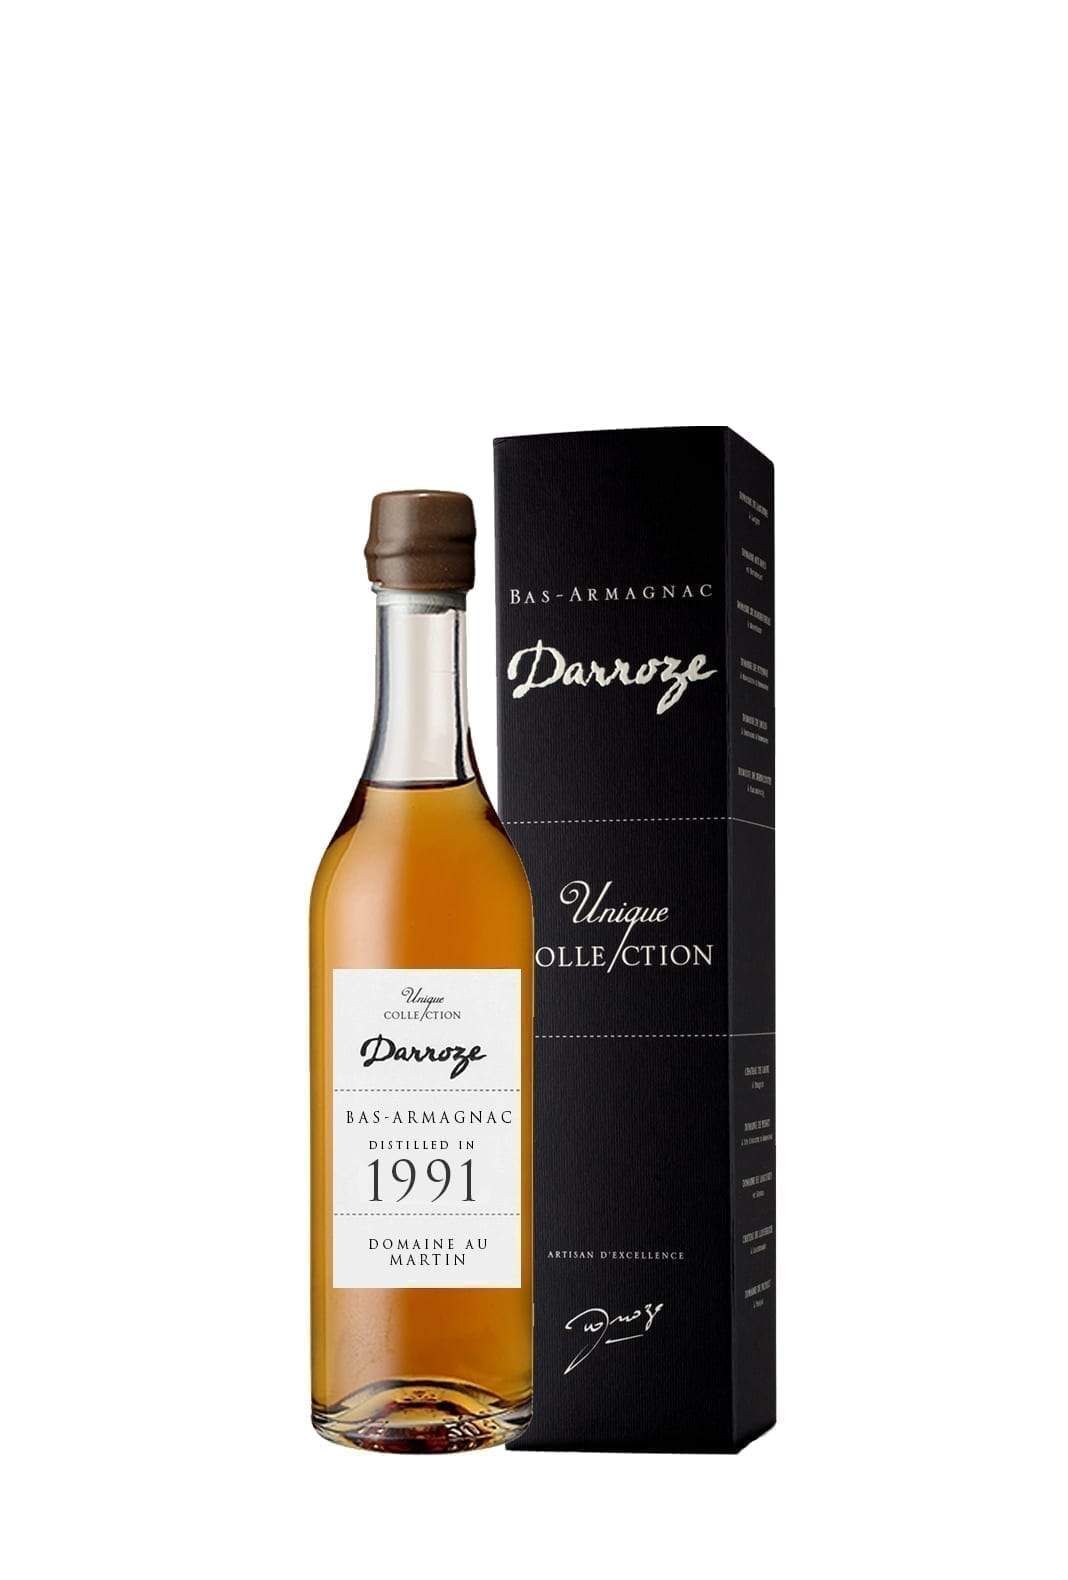 Darroze 1991 Martin Grand Bas Armagnac49% 200ml | Brandy | Shop online at Spirits of France